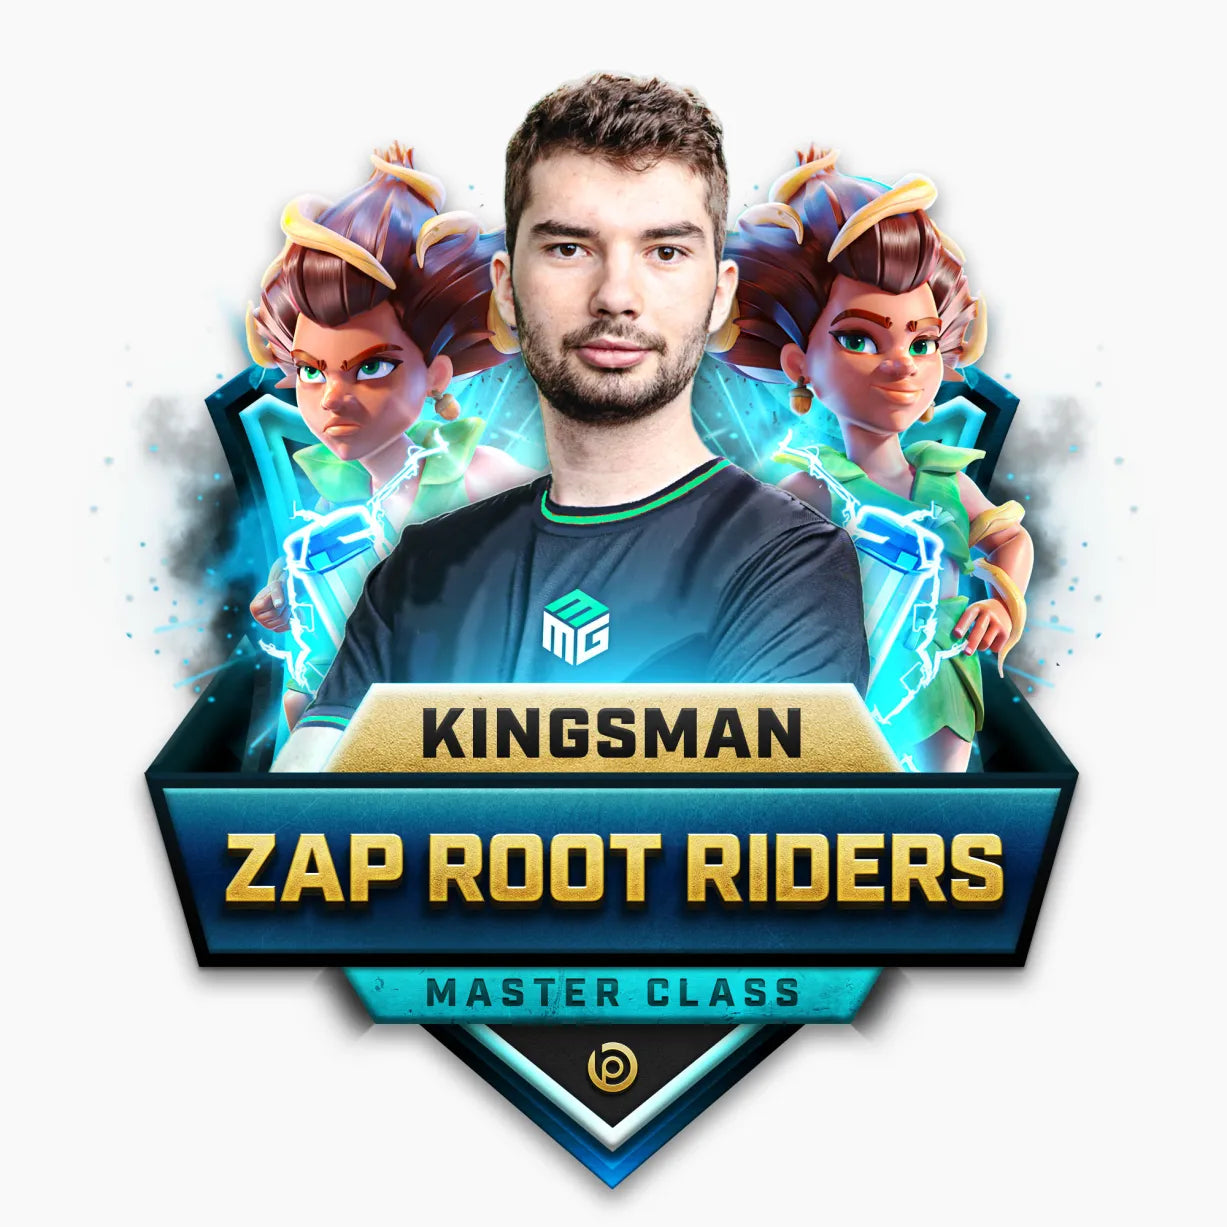 Zap Rootriders | Kingsman